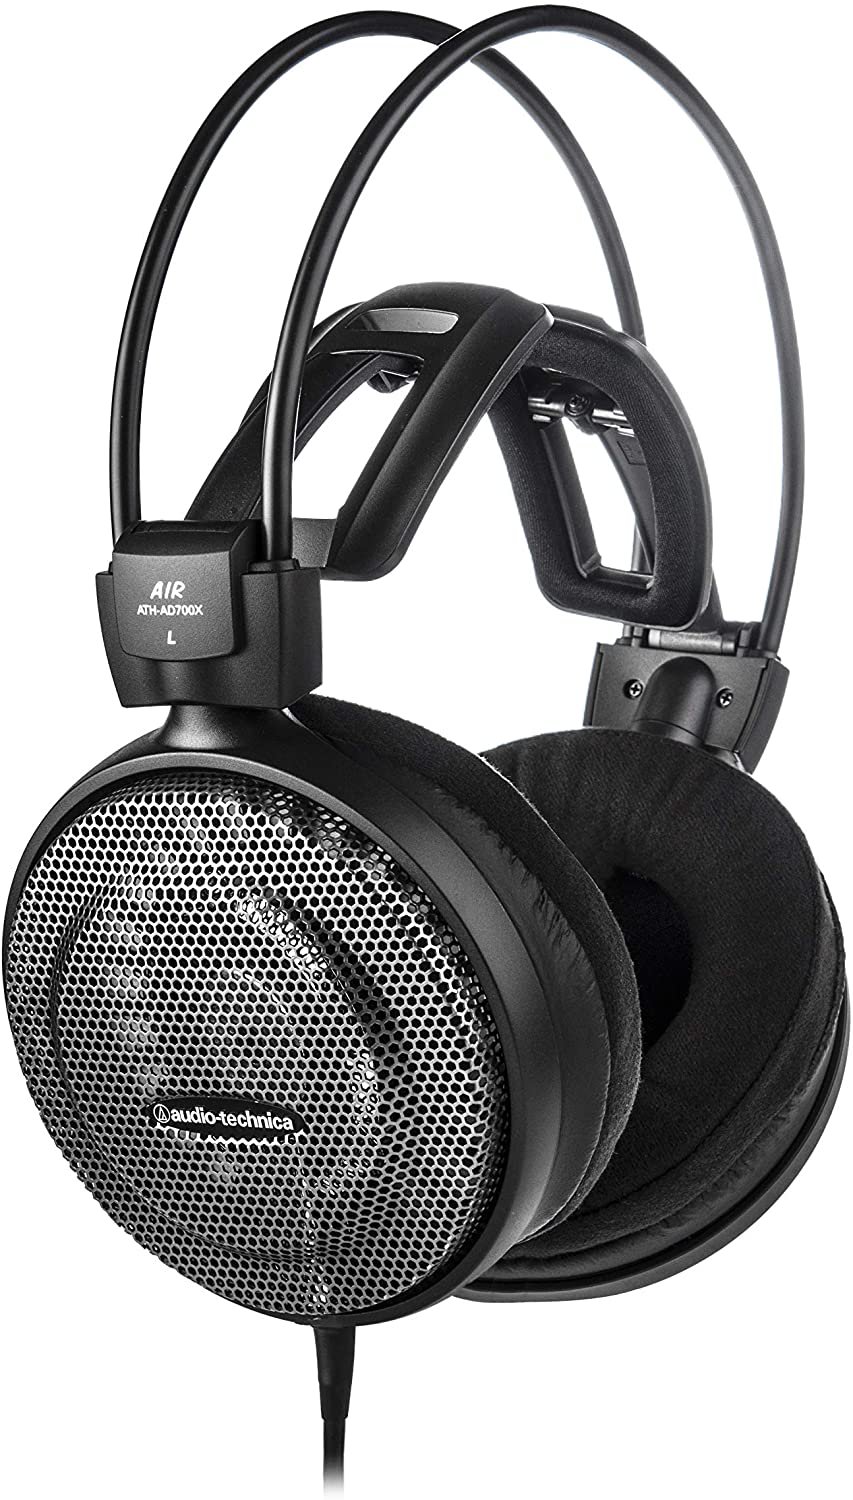 Audio-Technica ATH-AD700X Audiophile Open-Air Headphones Black